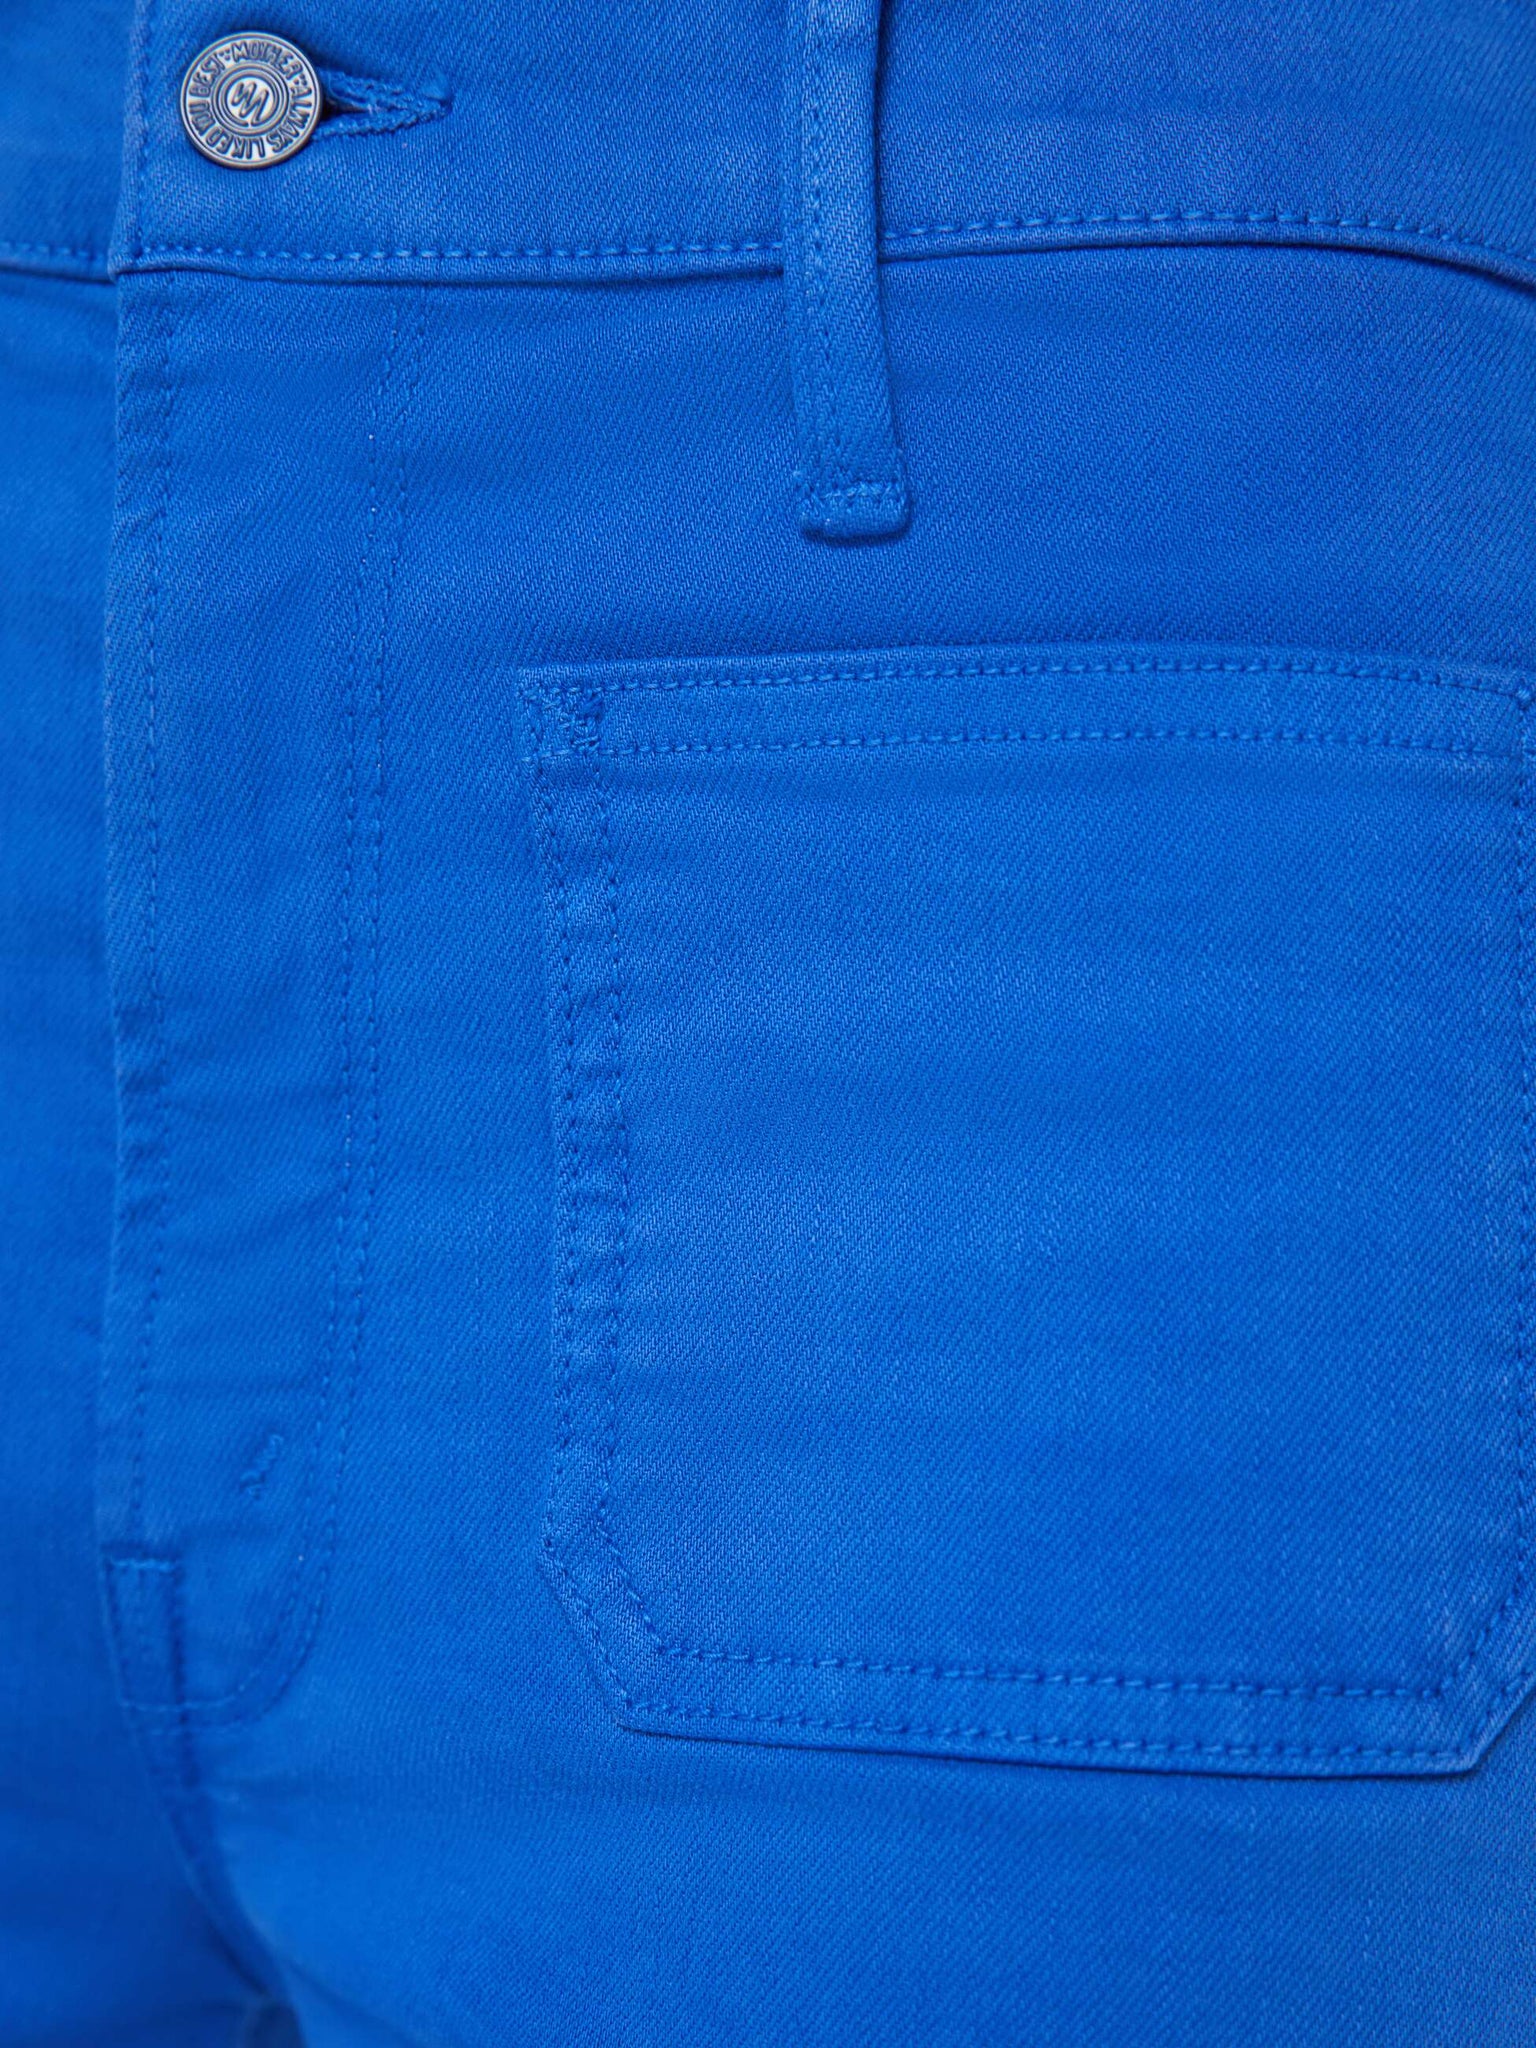 Patch Pocket Undercover Sneak in Snorkel Blue